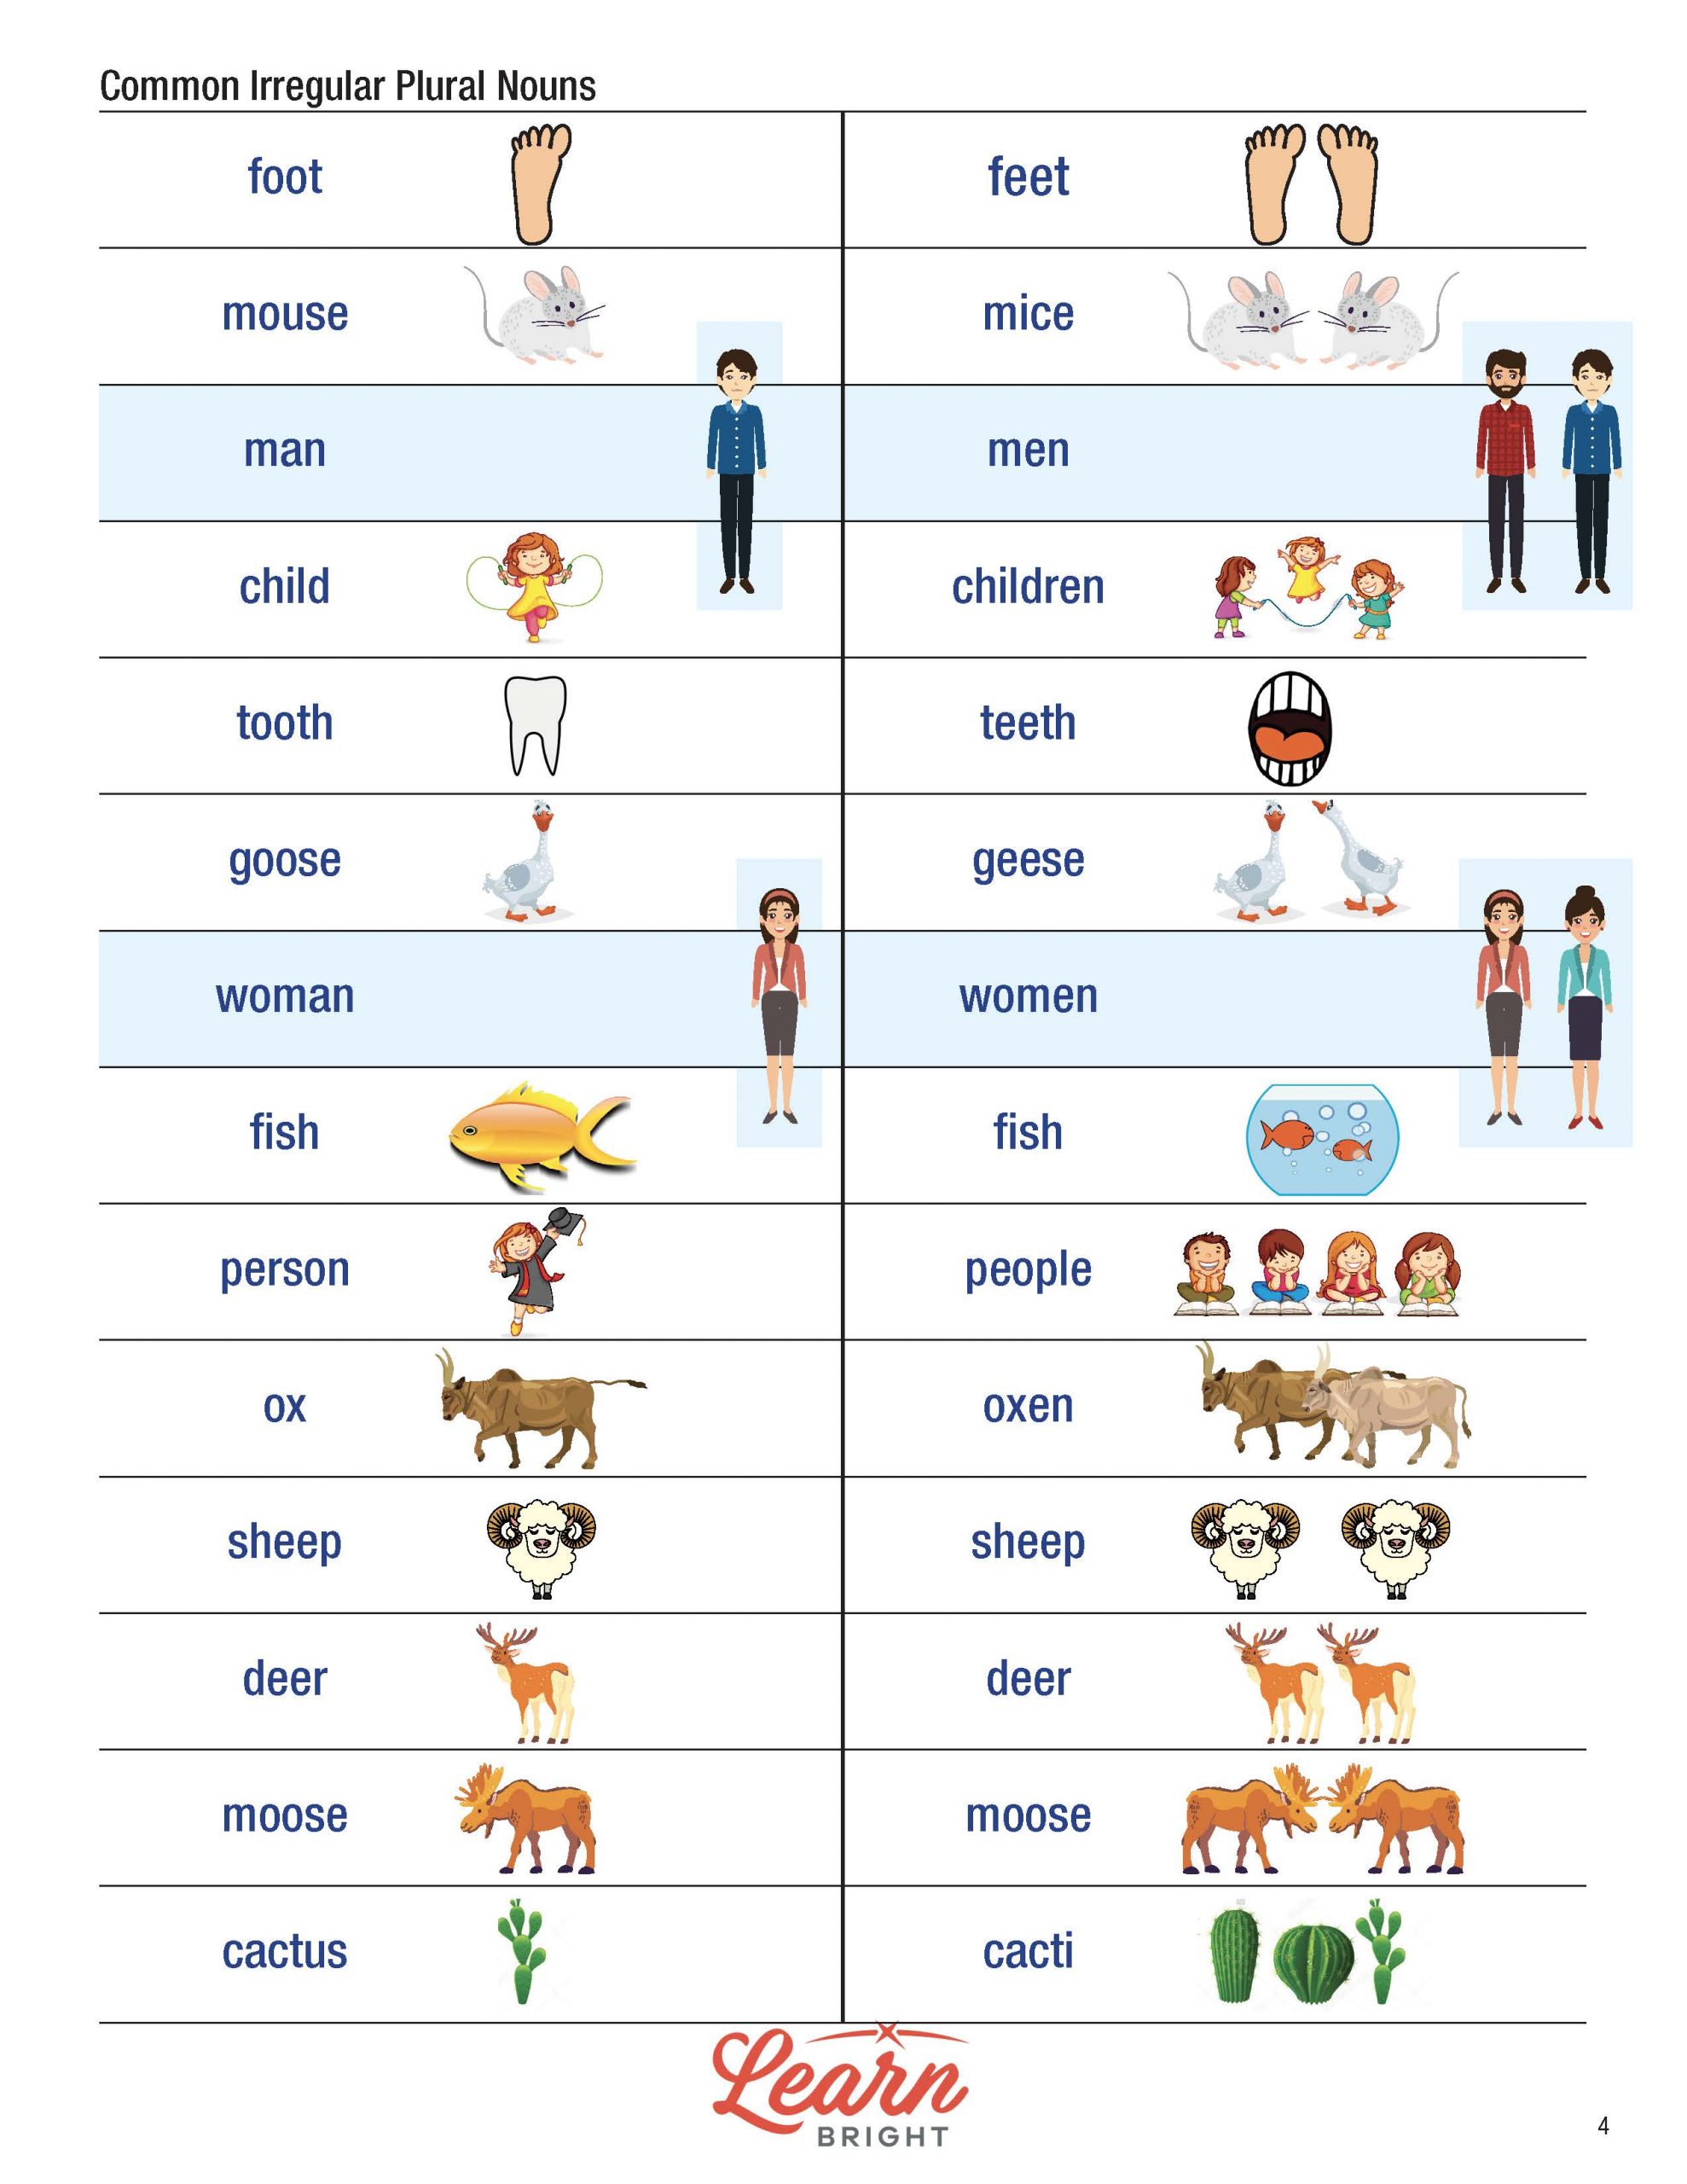 common-irregular-plural-nouns-in-english-eslbuzz-learning-english